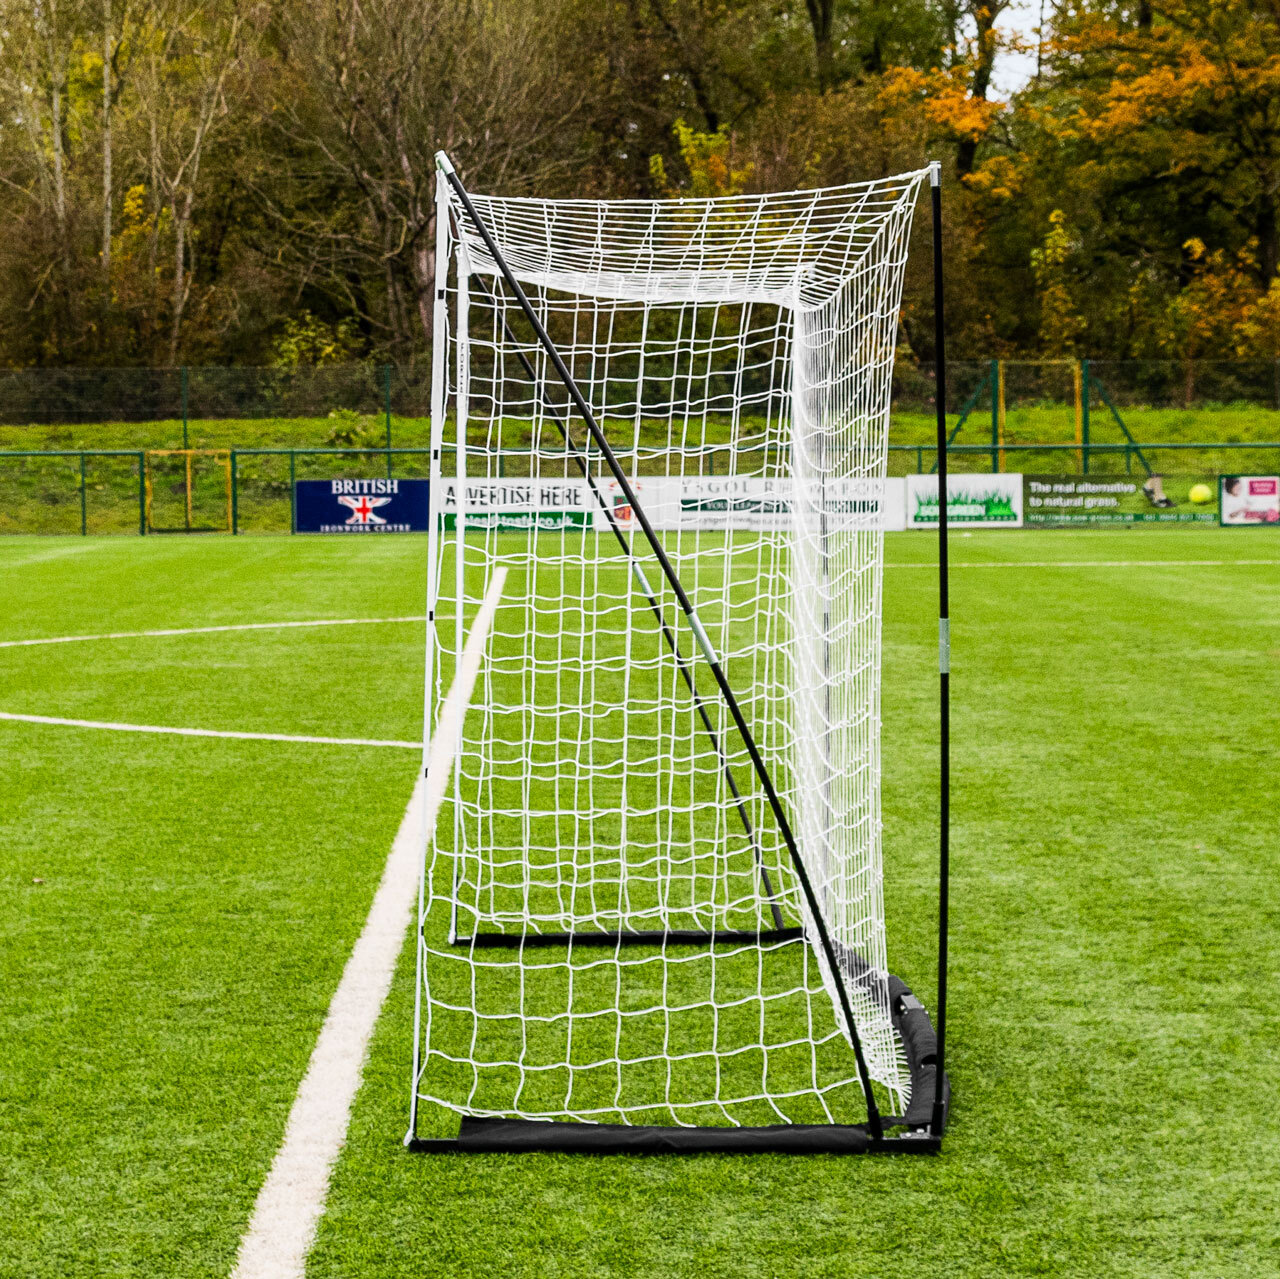 3.6m X 1.8m FORZA ProFlex Portable Soccer Goal